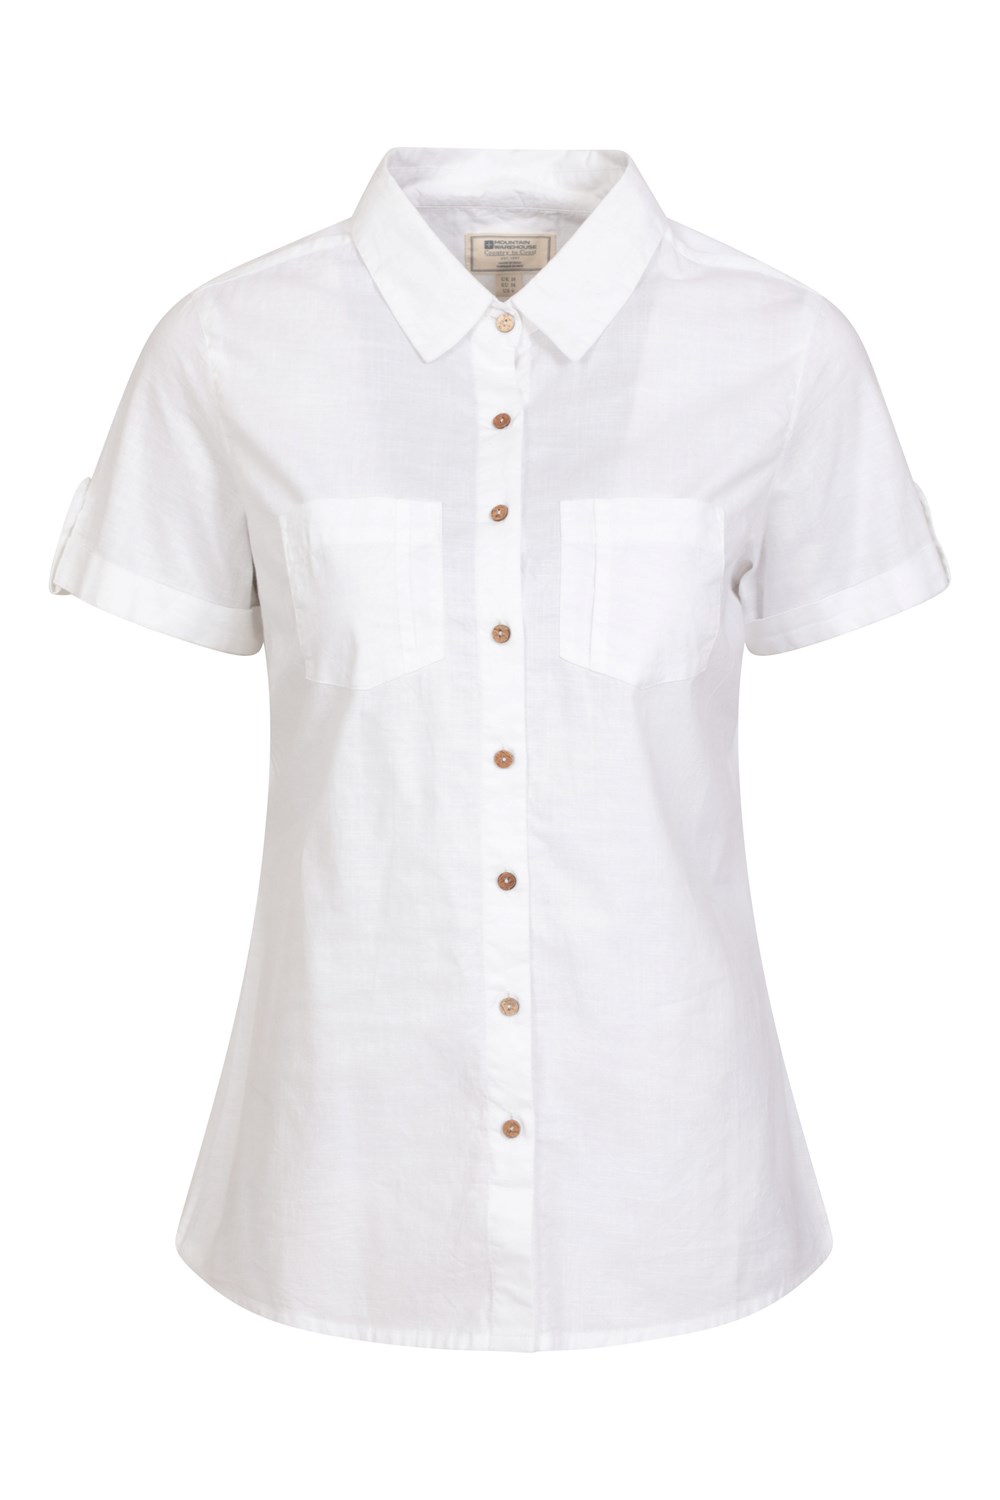 Mountain Warehouse Coconut Ladies Shirt 100% Cotton Short Sleeve Zipped ...